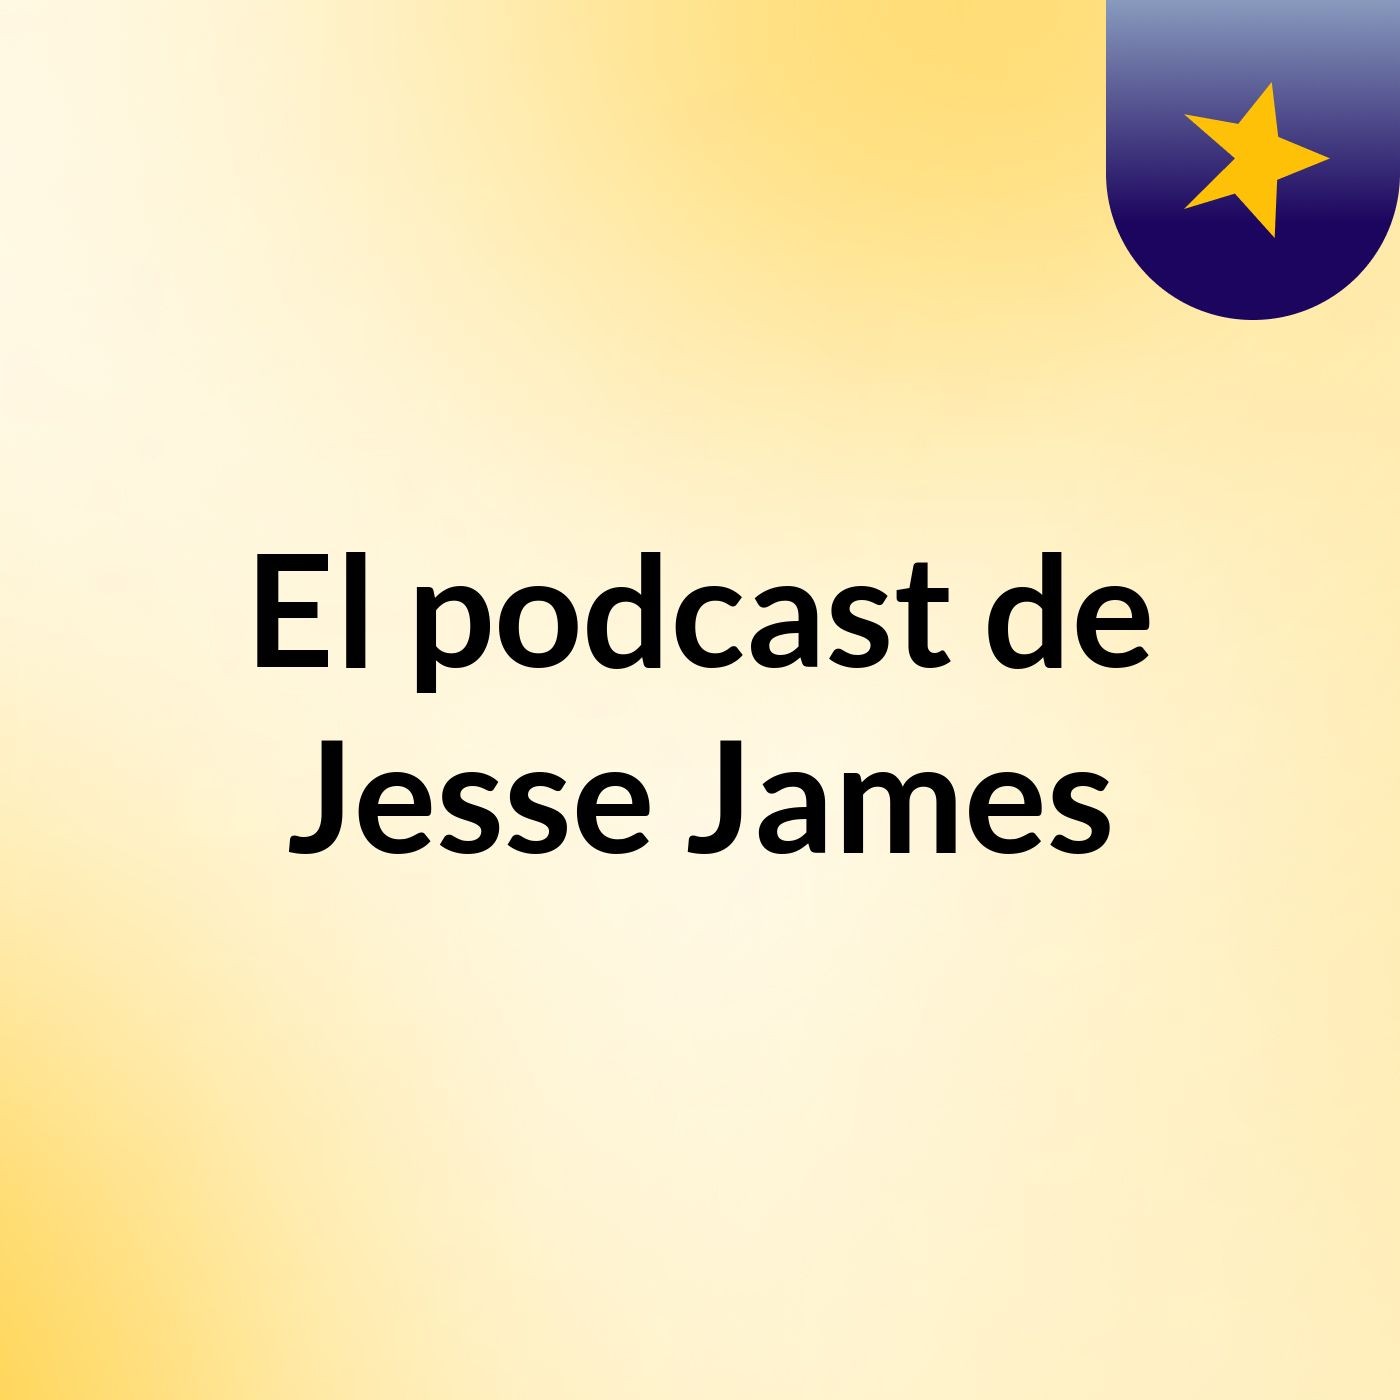 El podcast de Jesse James